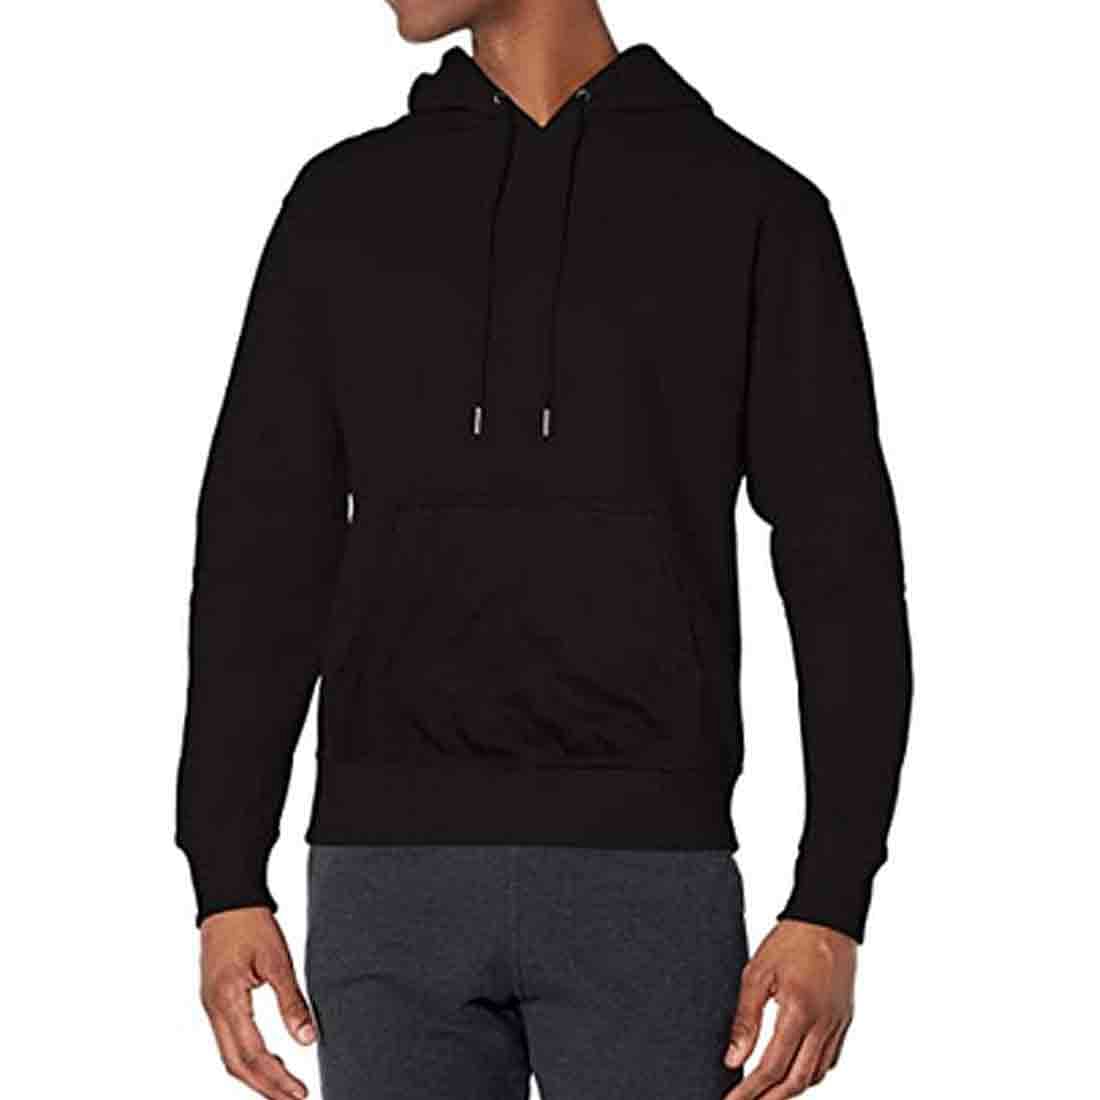 Nutcase stylish hoodie sweatshirt Unisex - Player Nutcase